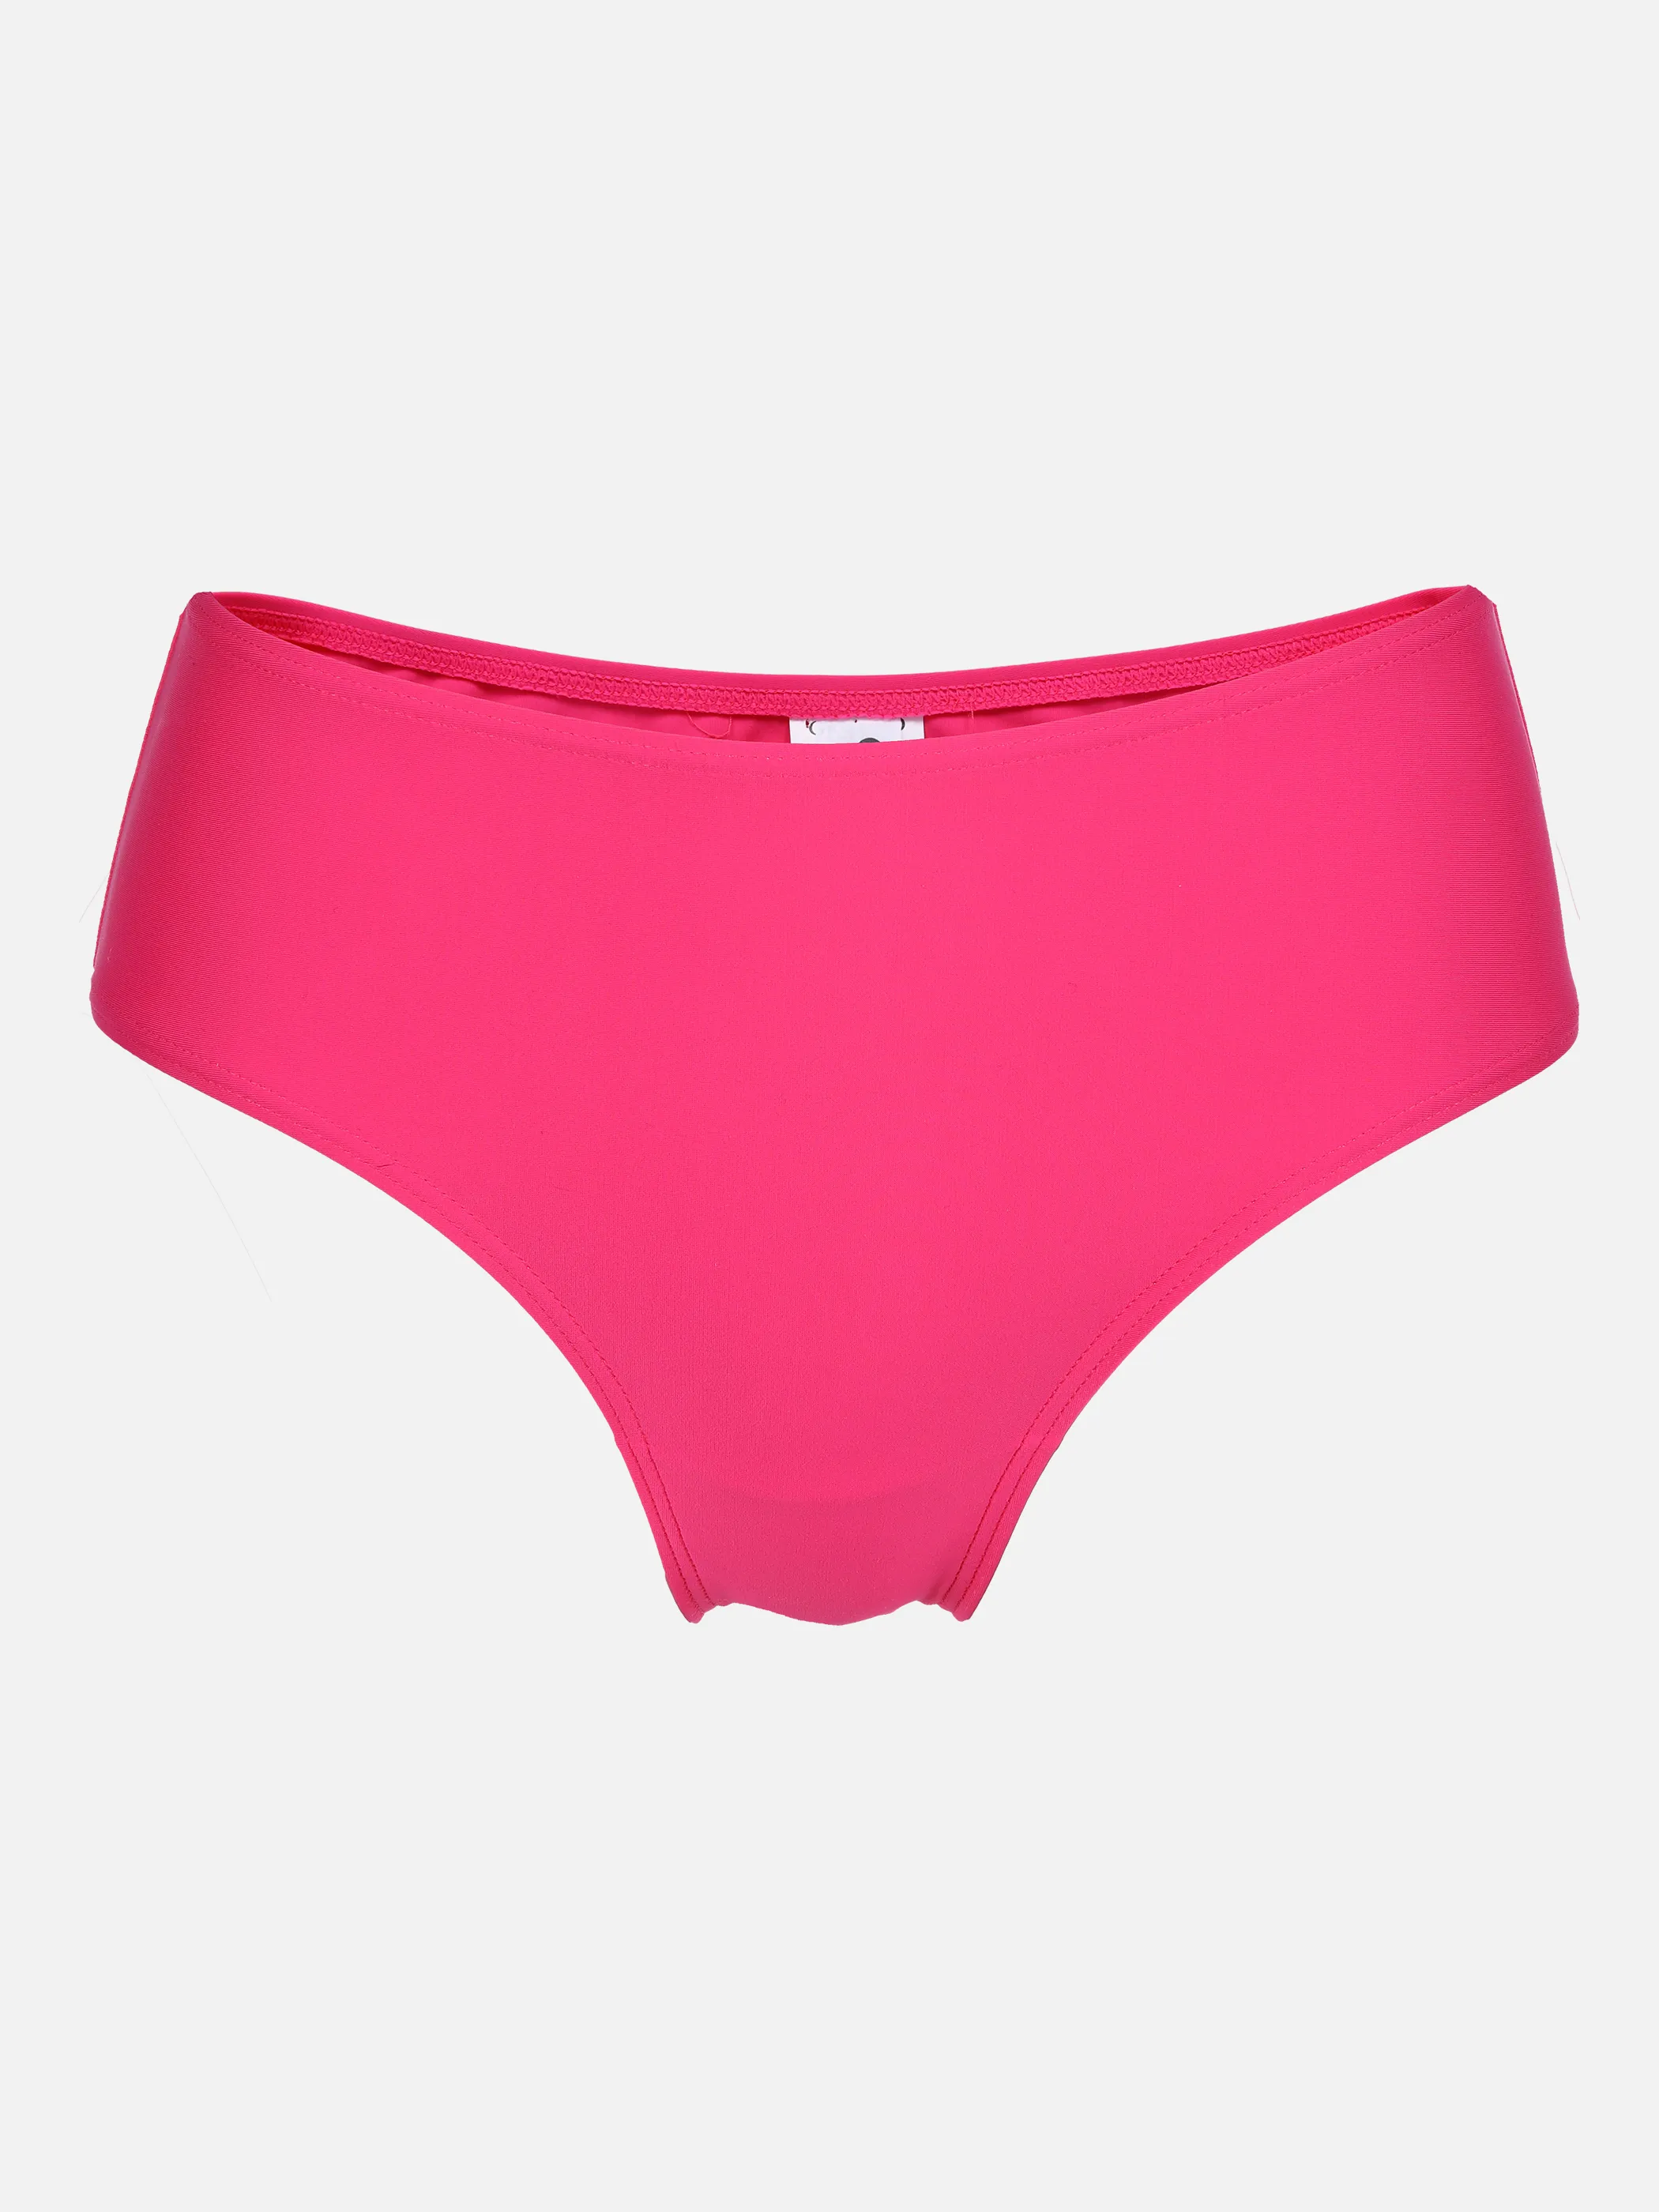 Grinario Sports Da-Bikini-Hose Pink 863019 PINK 1